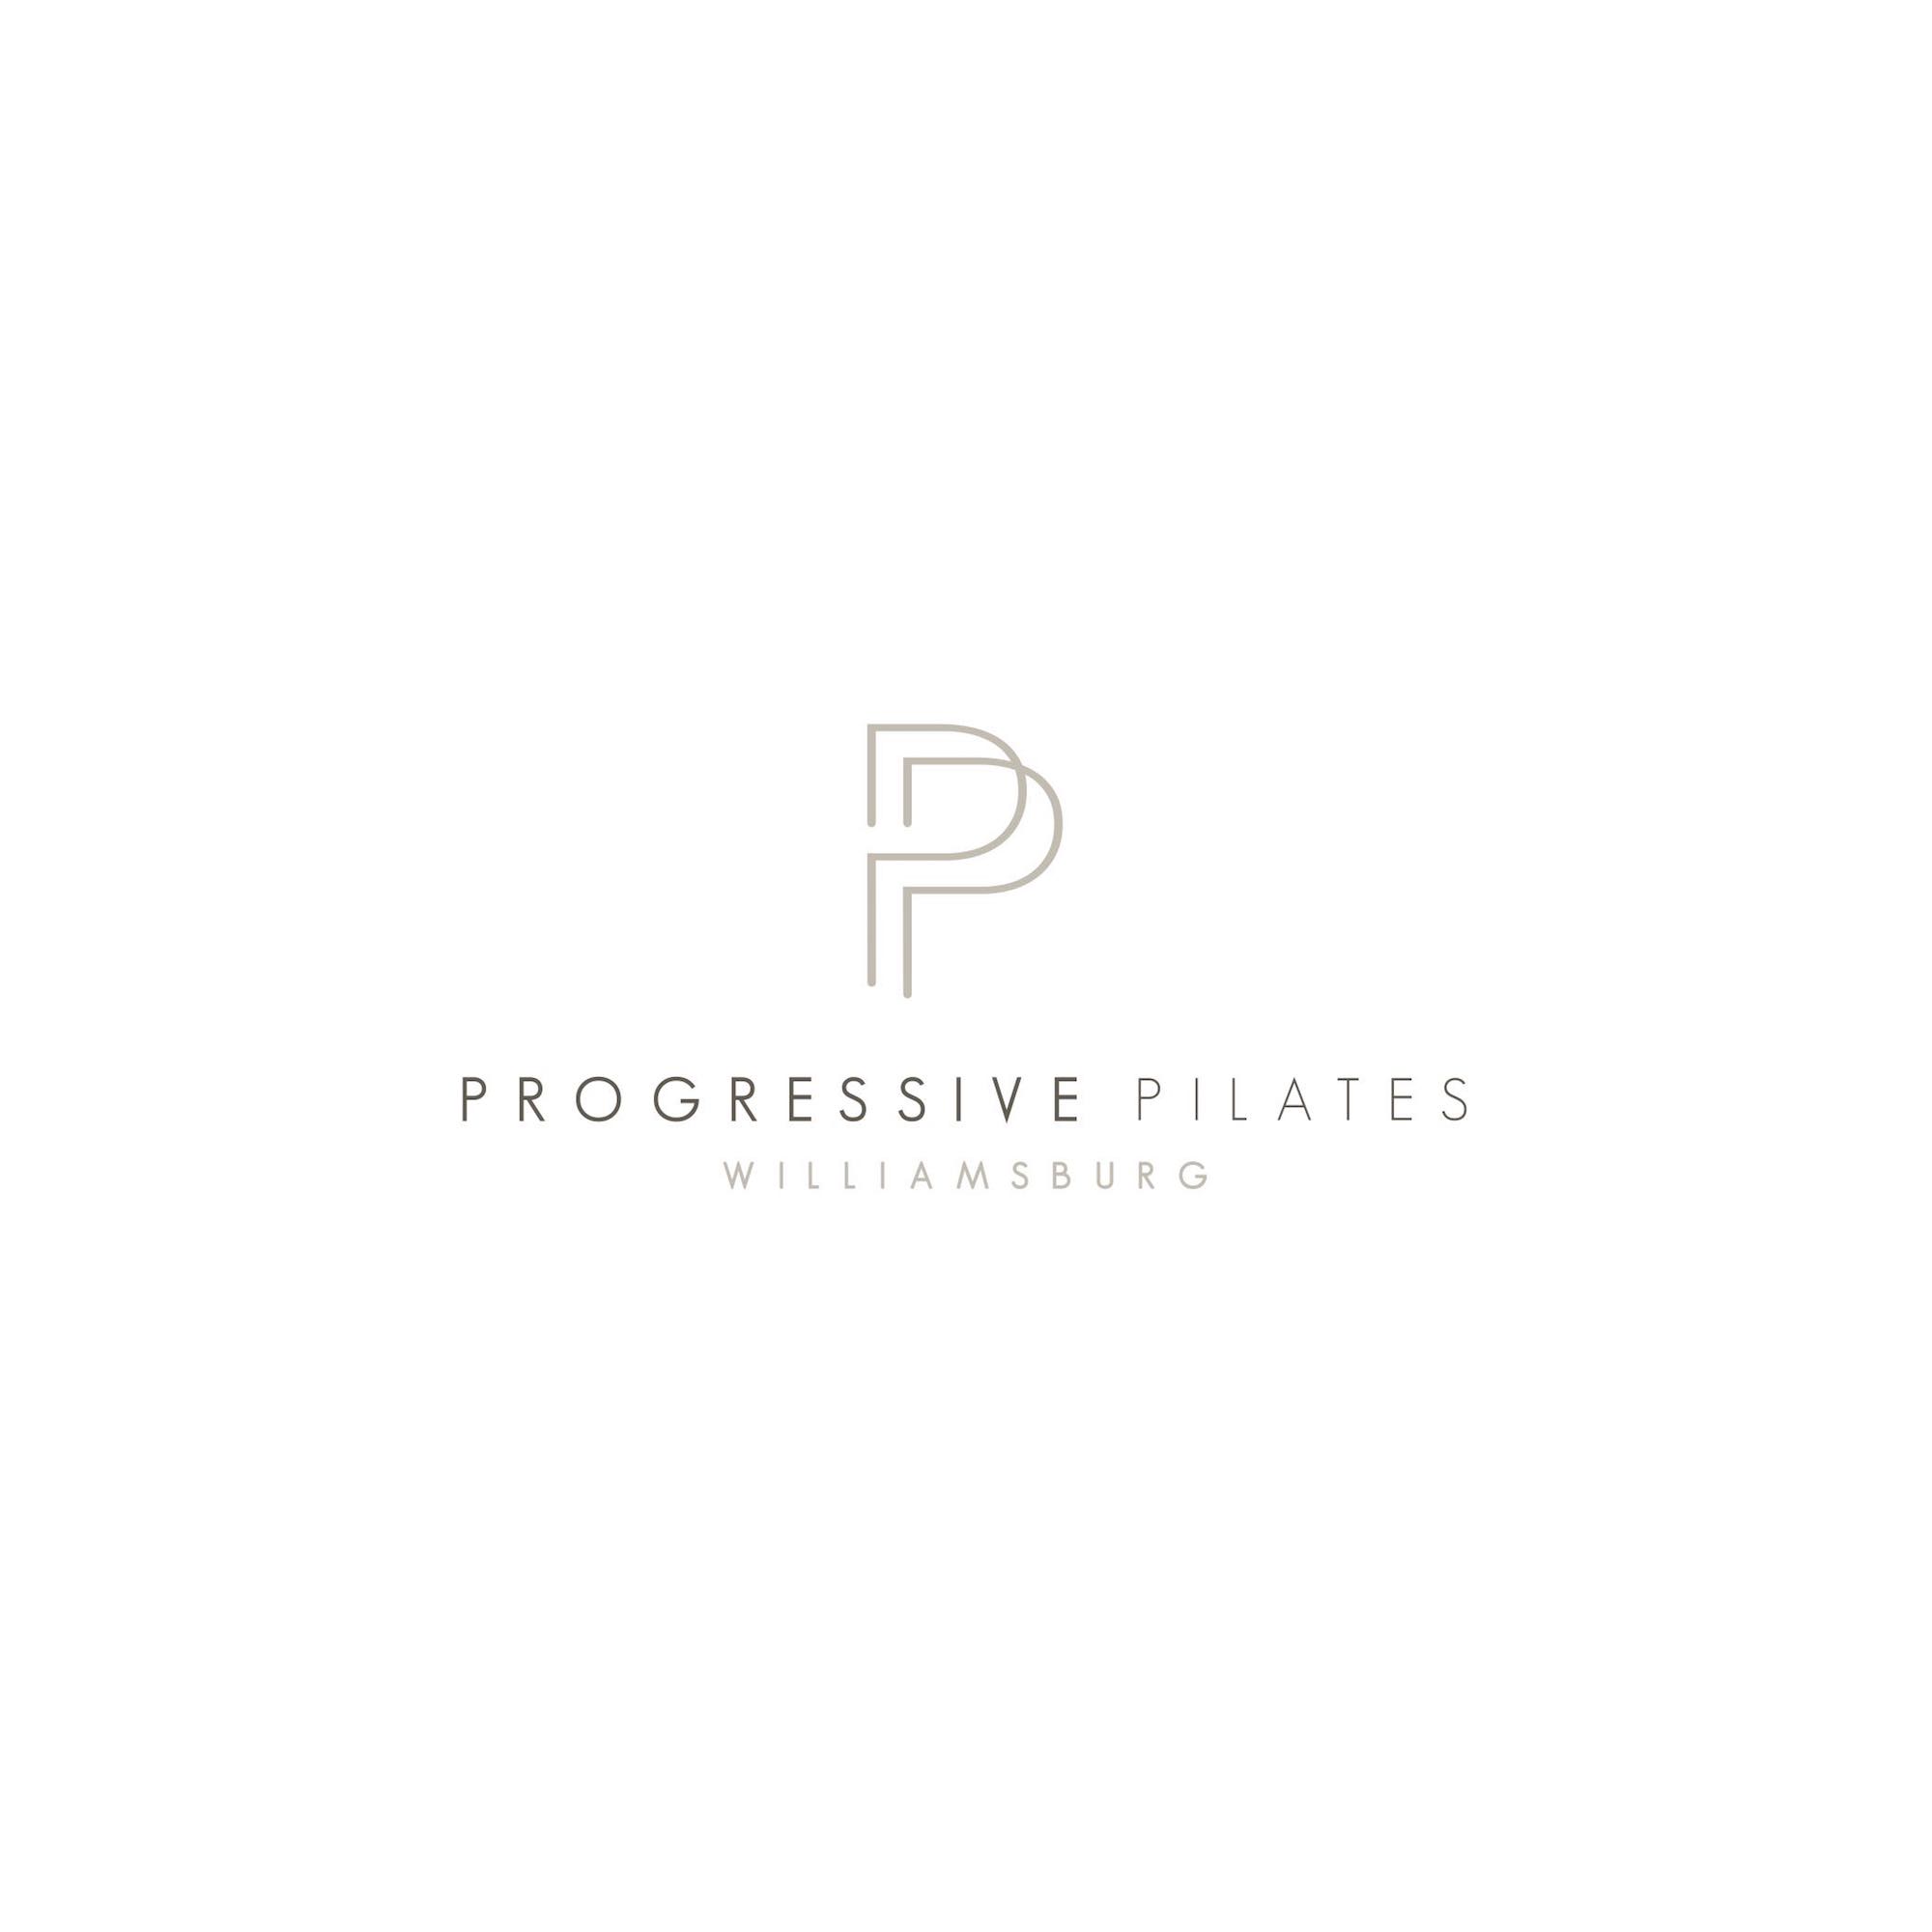 ProgressivePilates Logo